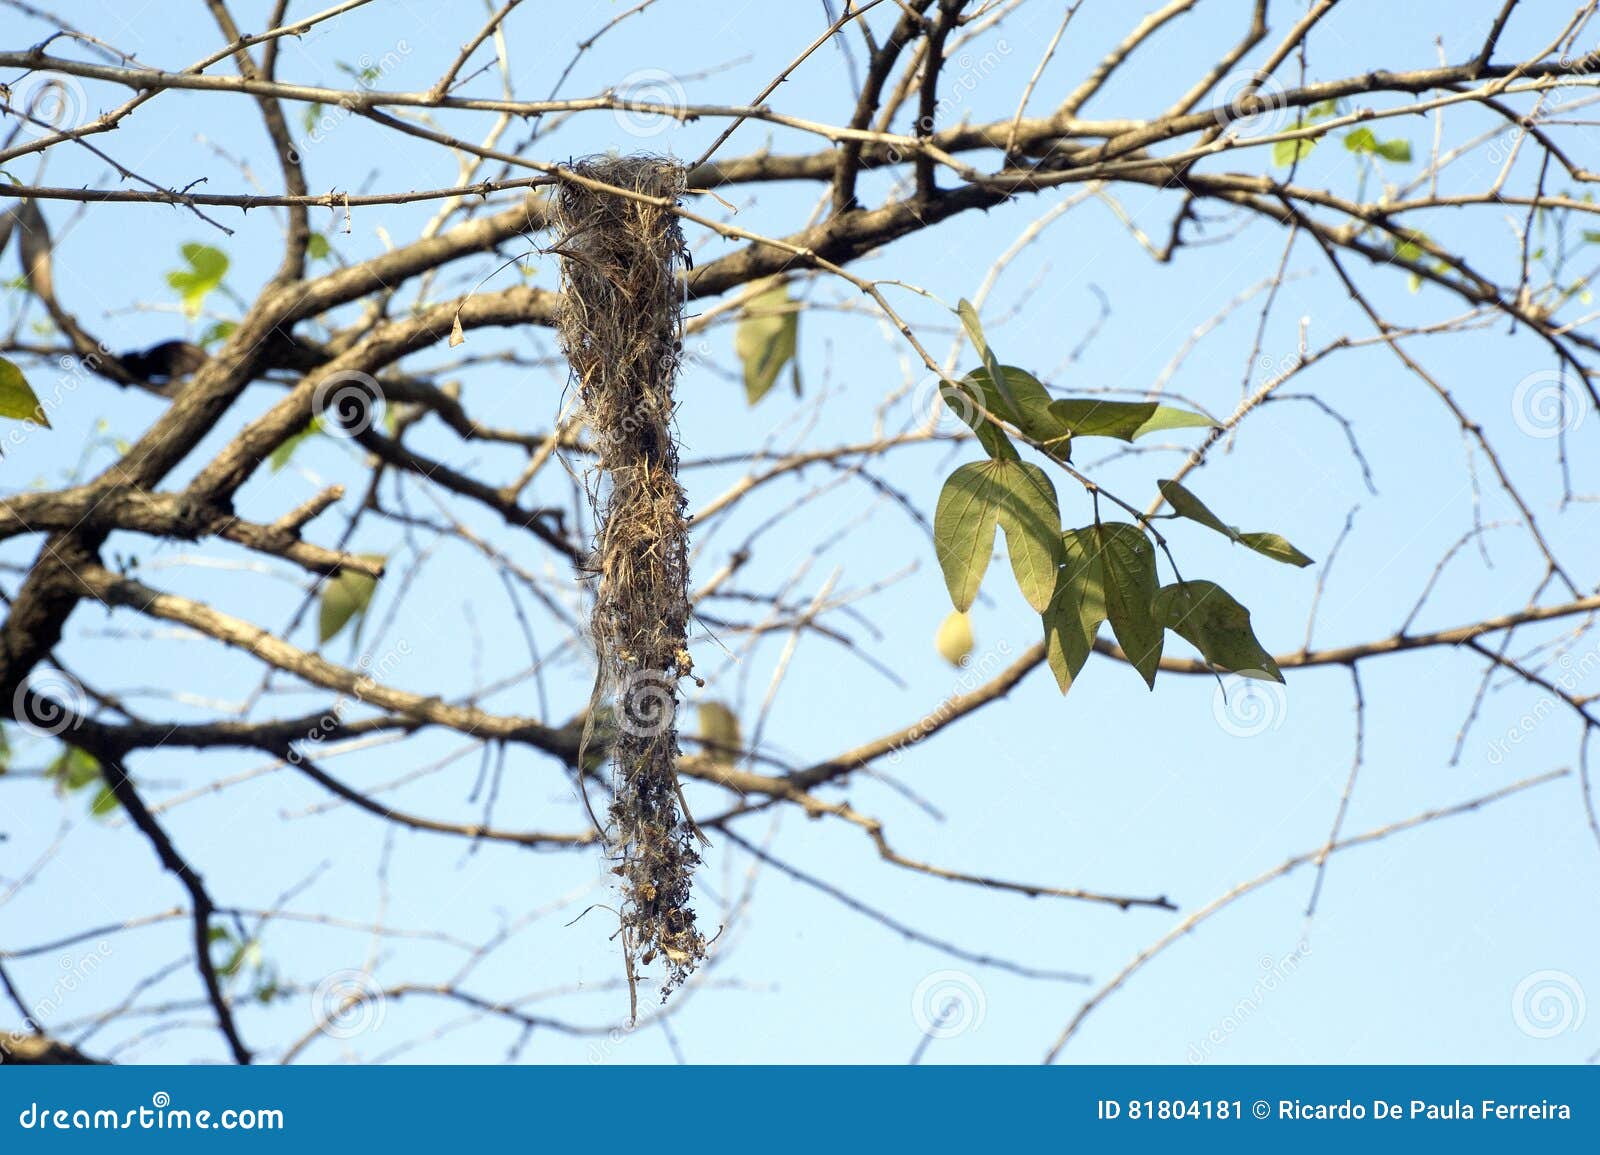 nest of common tody-flycatcher